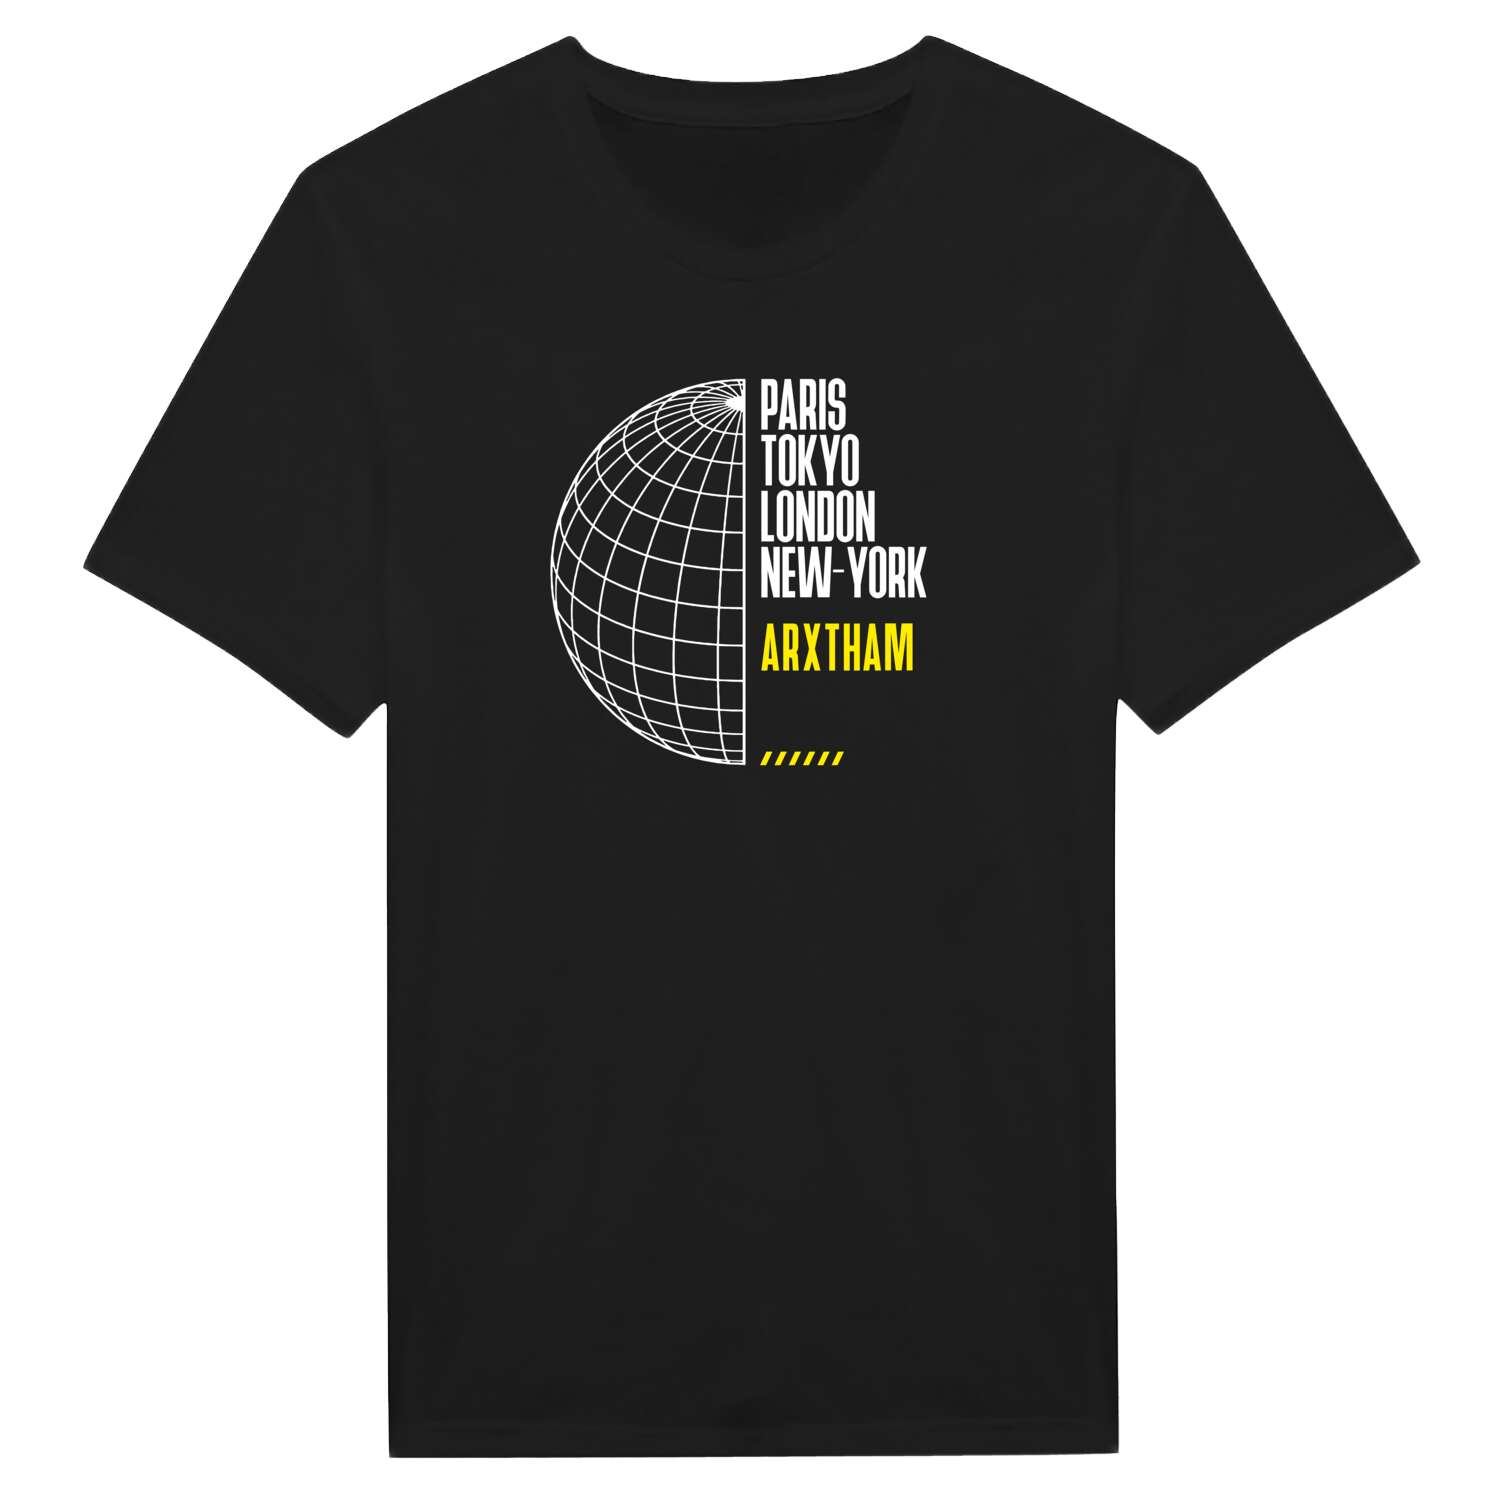 Arxtham T-Shirt »Paris Tokyo London«